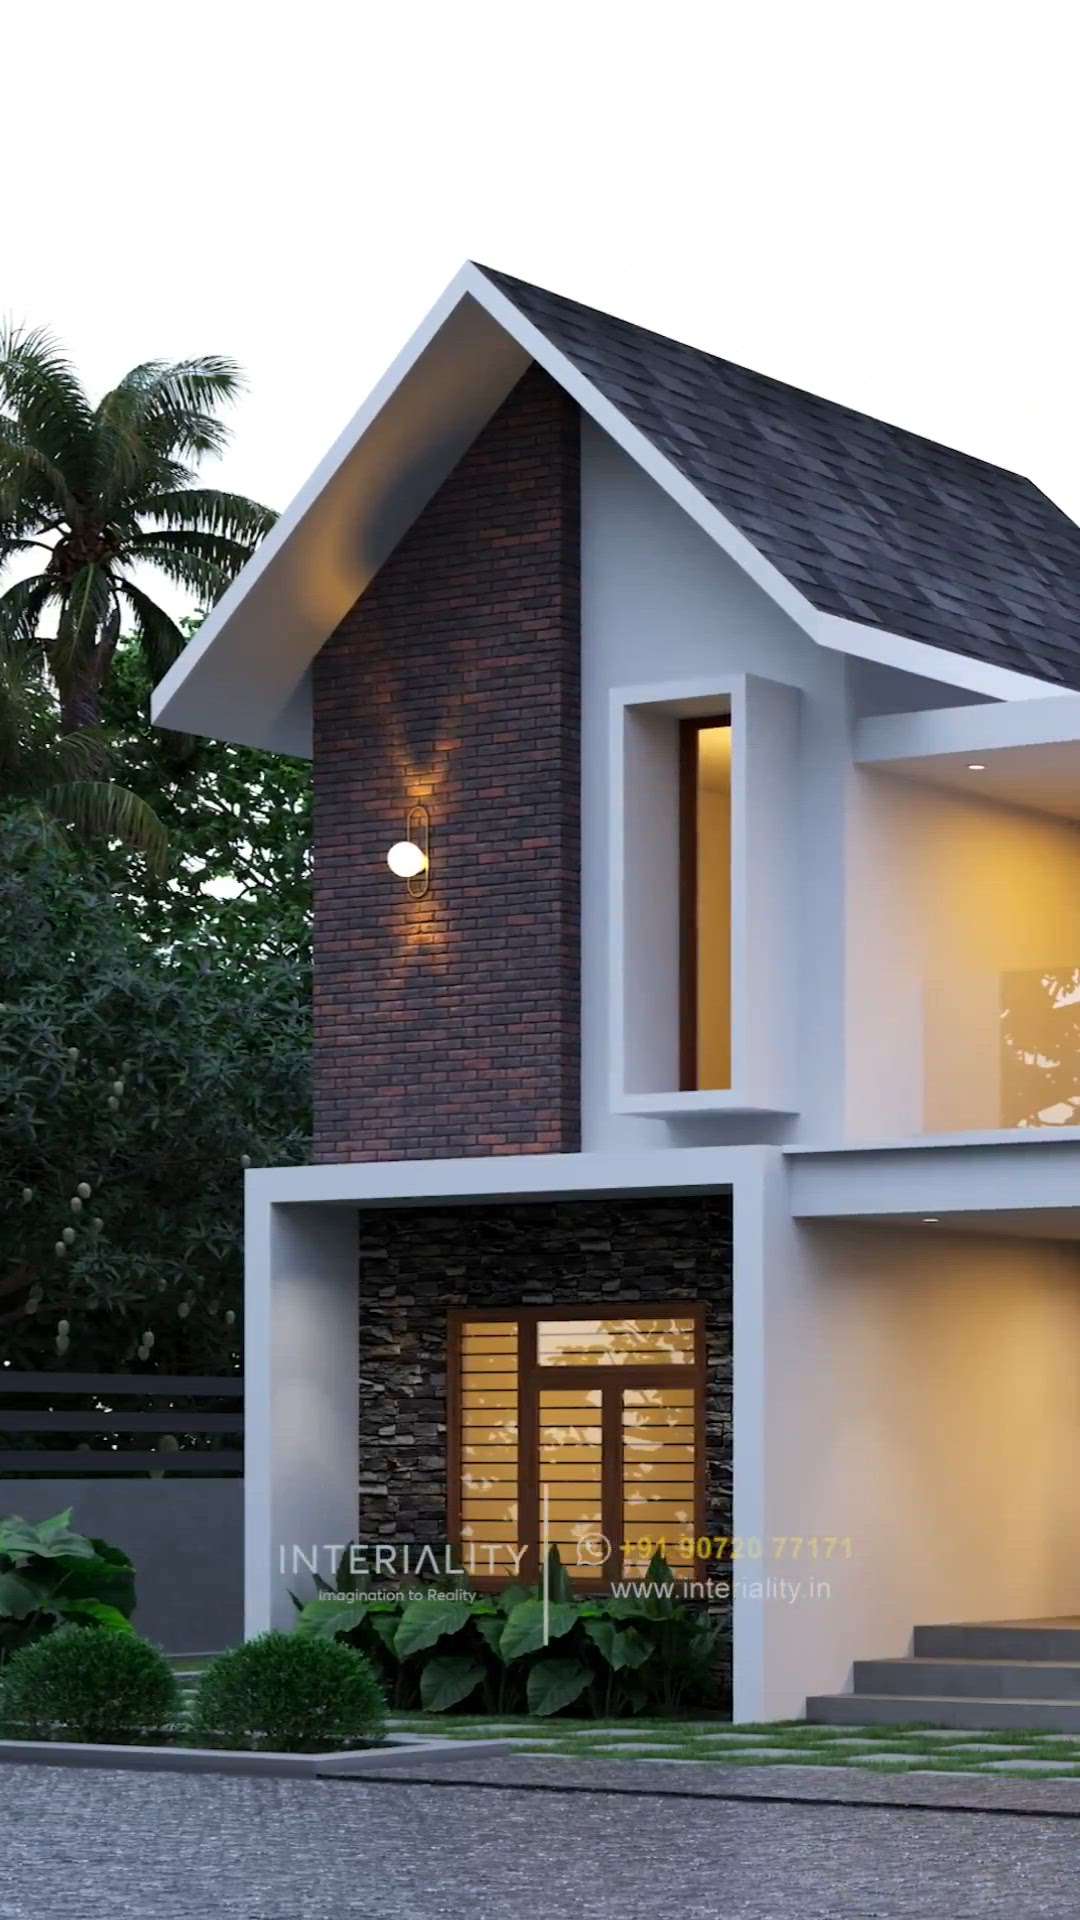 3D Home Visualization

Doing Online Design
▶️Planning
▶️Exterior Design
▶️Interior Design
▶️Landscape Design

Whatsapp: +91 90720 77171

#keralaarchitecture #keralahomeplanners #keralahomedesign #3dhomedesign #keralahouse #indianarchitecturel